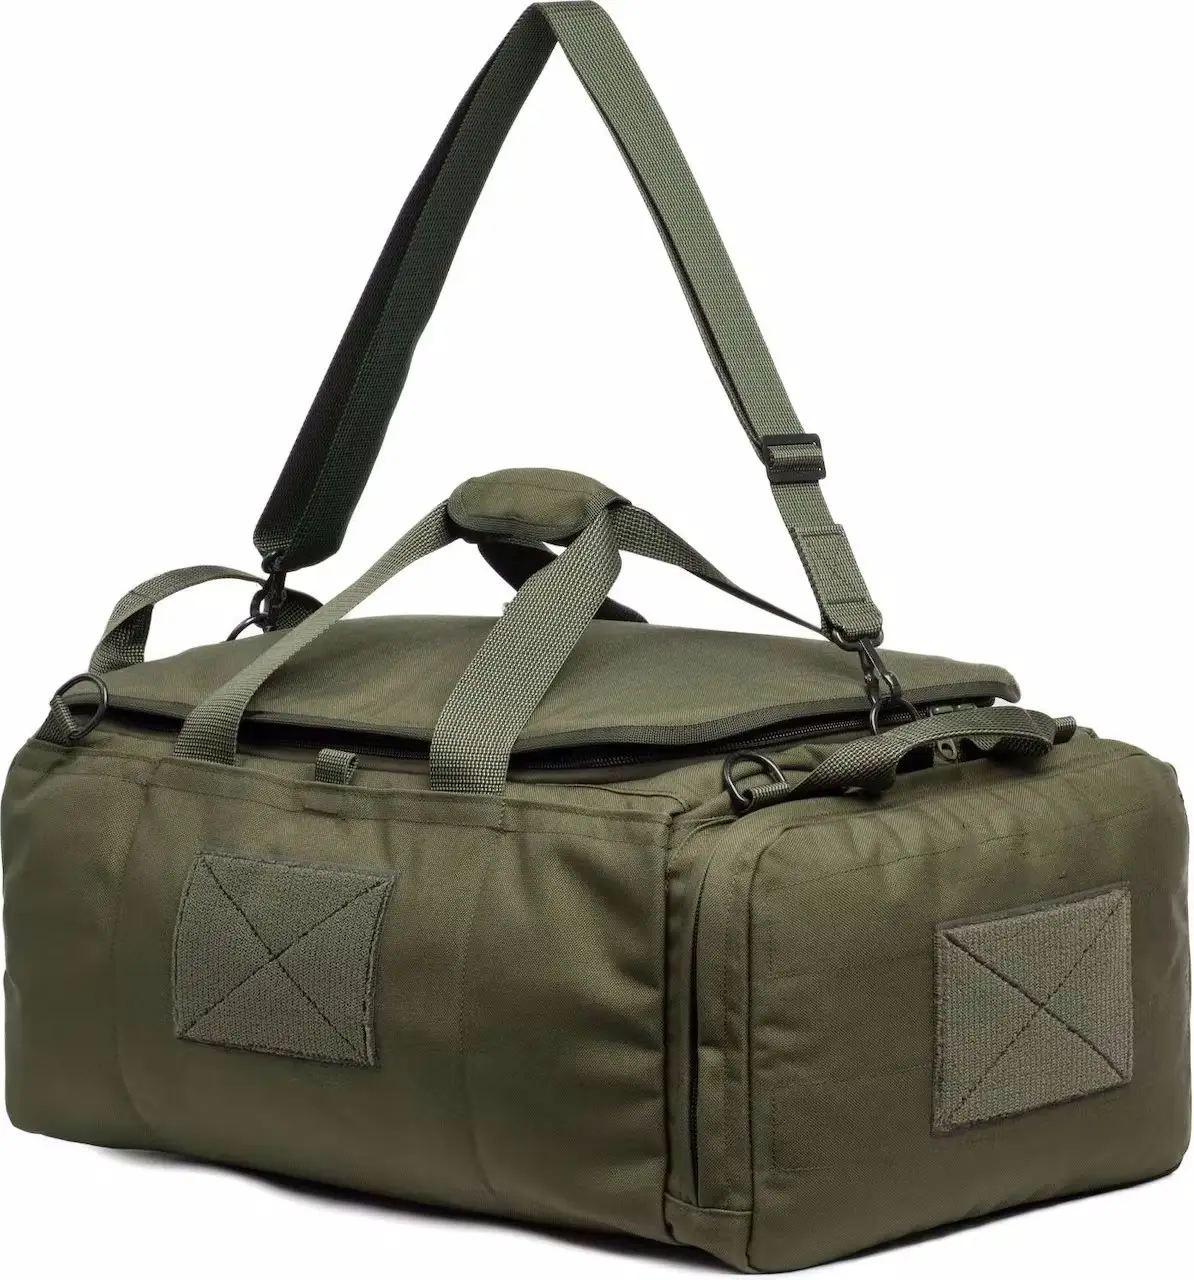 50L Green Camera Equipment Duffle Bag everyday use work travel sports adaptable Tote shoulder gig bag heavy duty kitbag